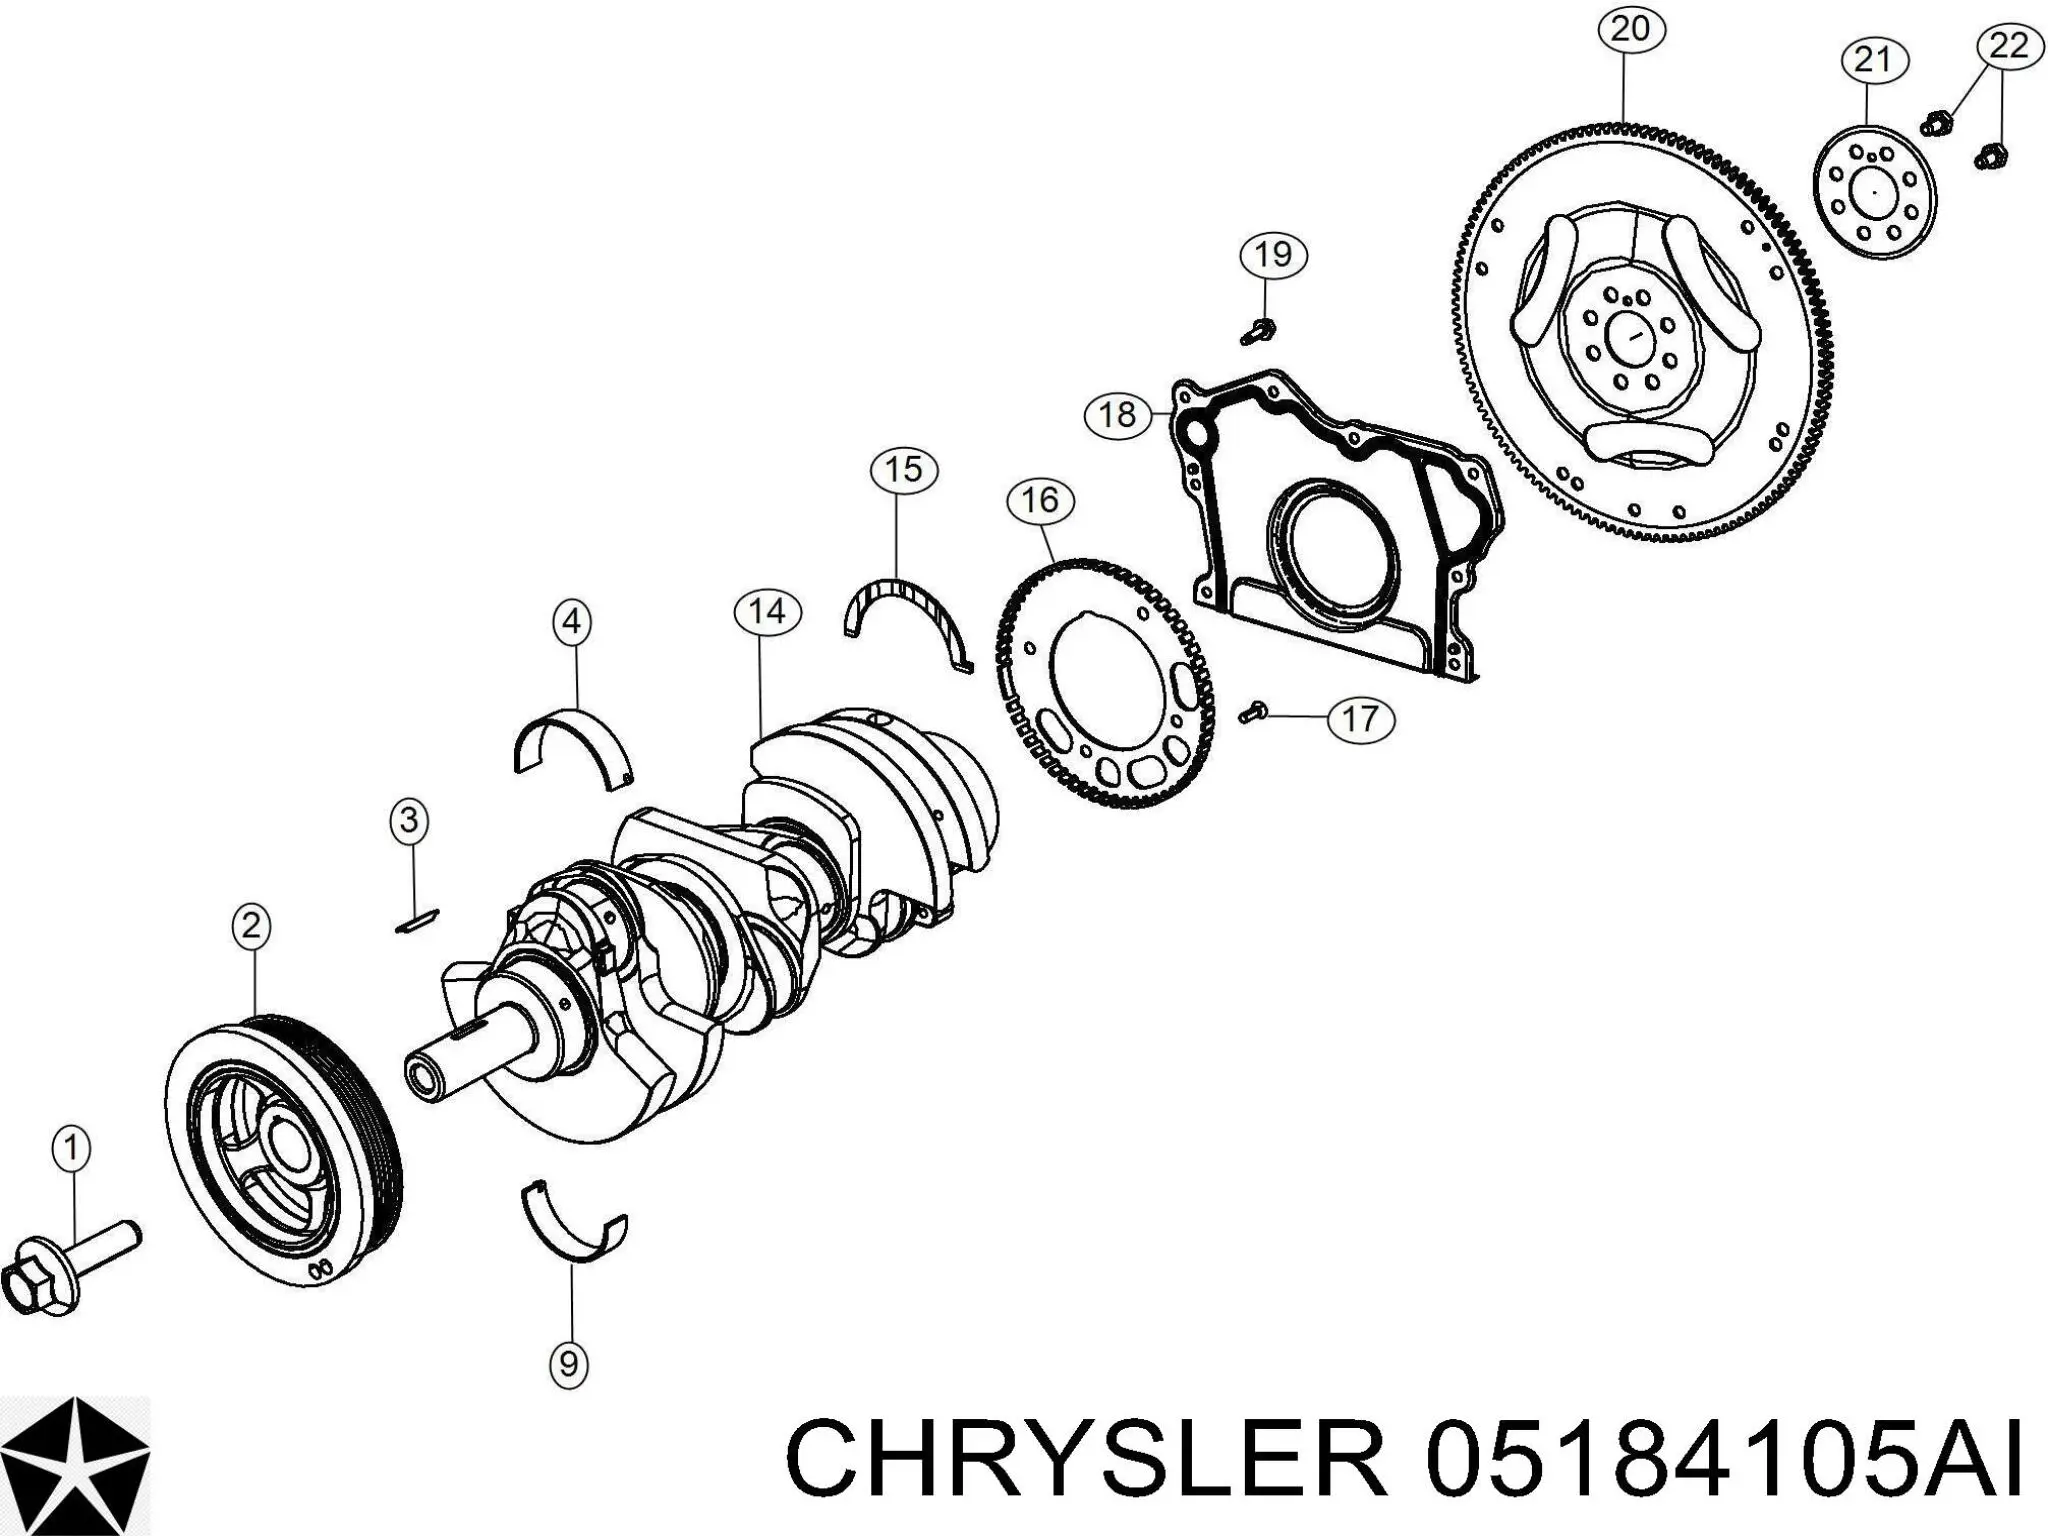 05184105AI Chrysler juego de cojinetes de cigüeñal, estándar, (std)